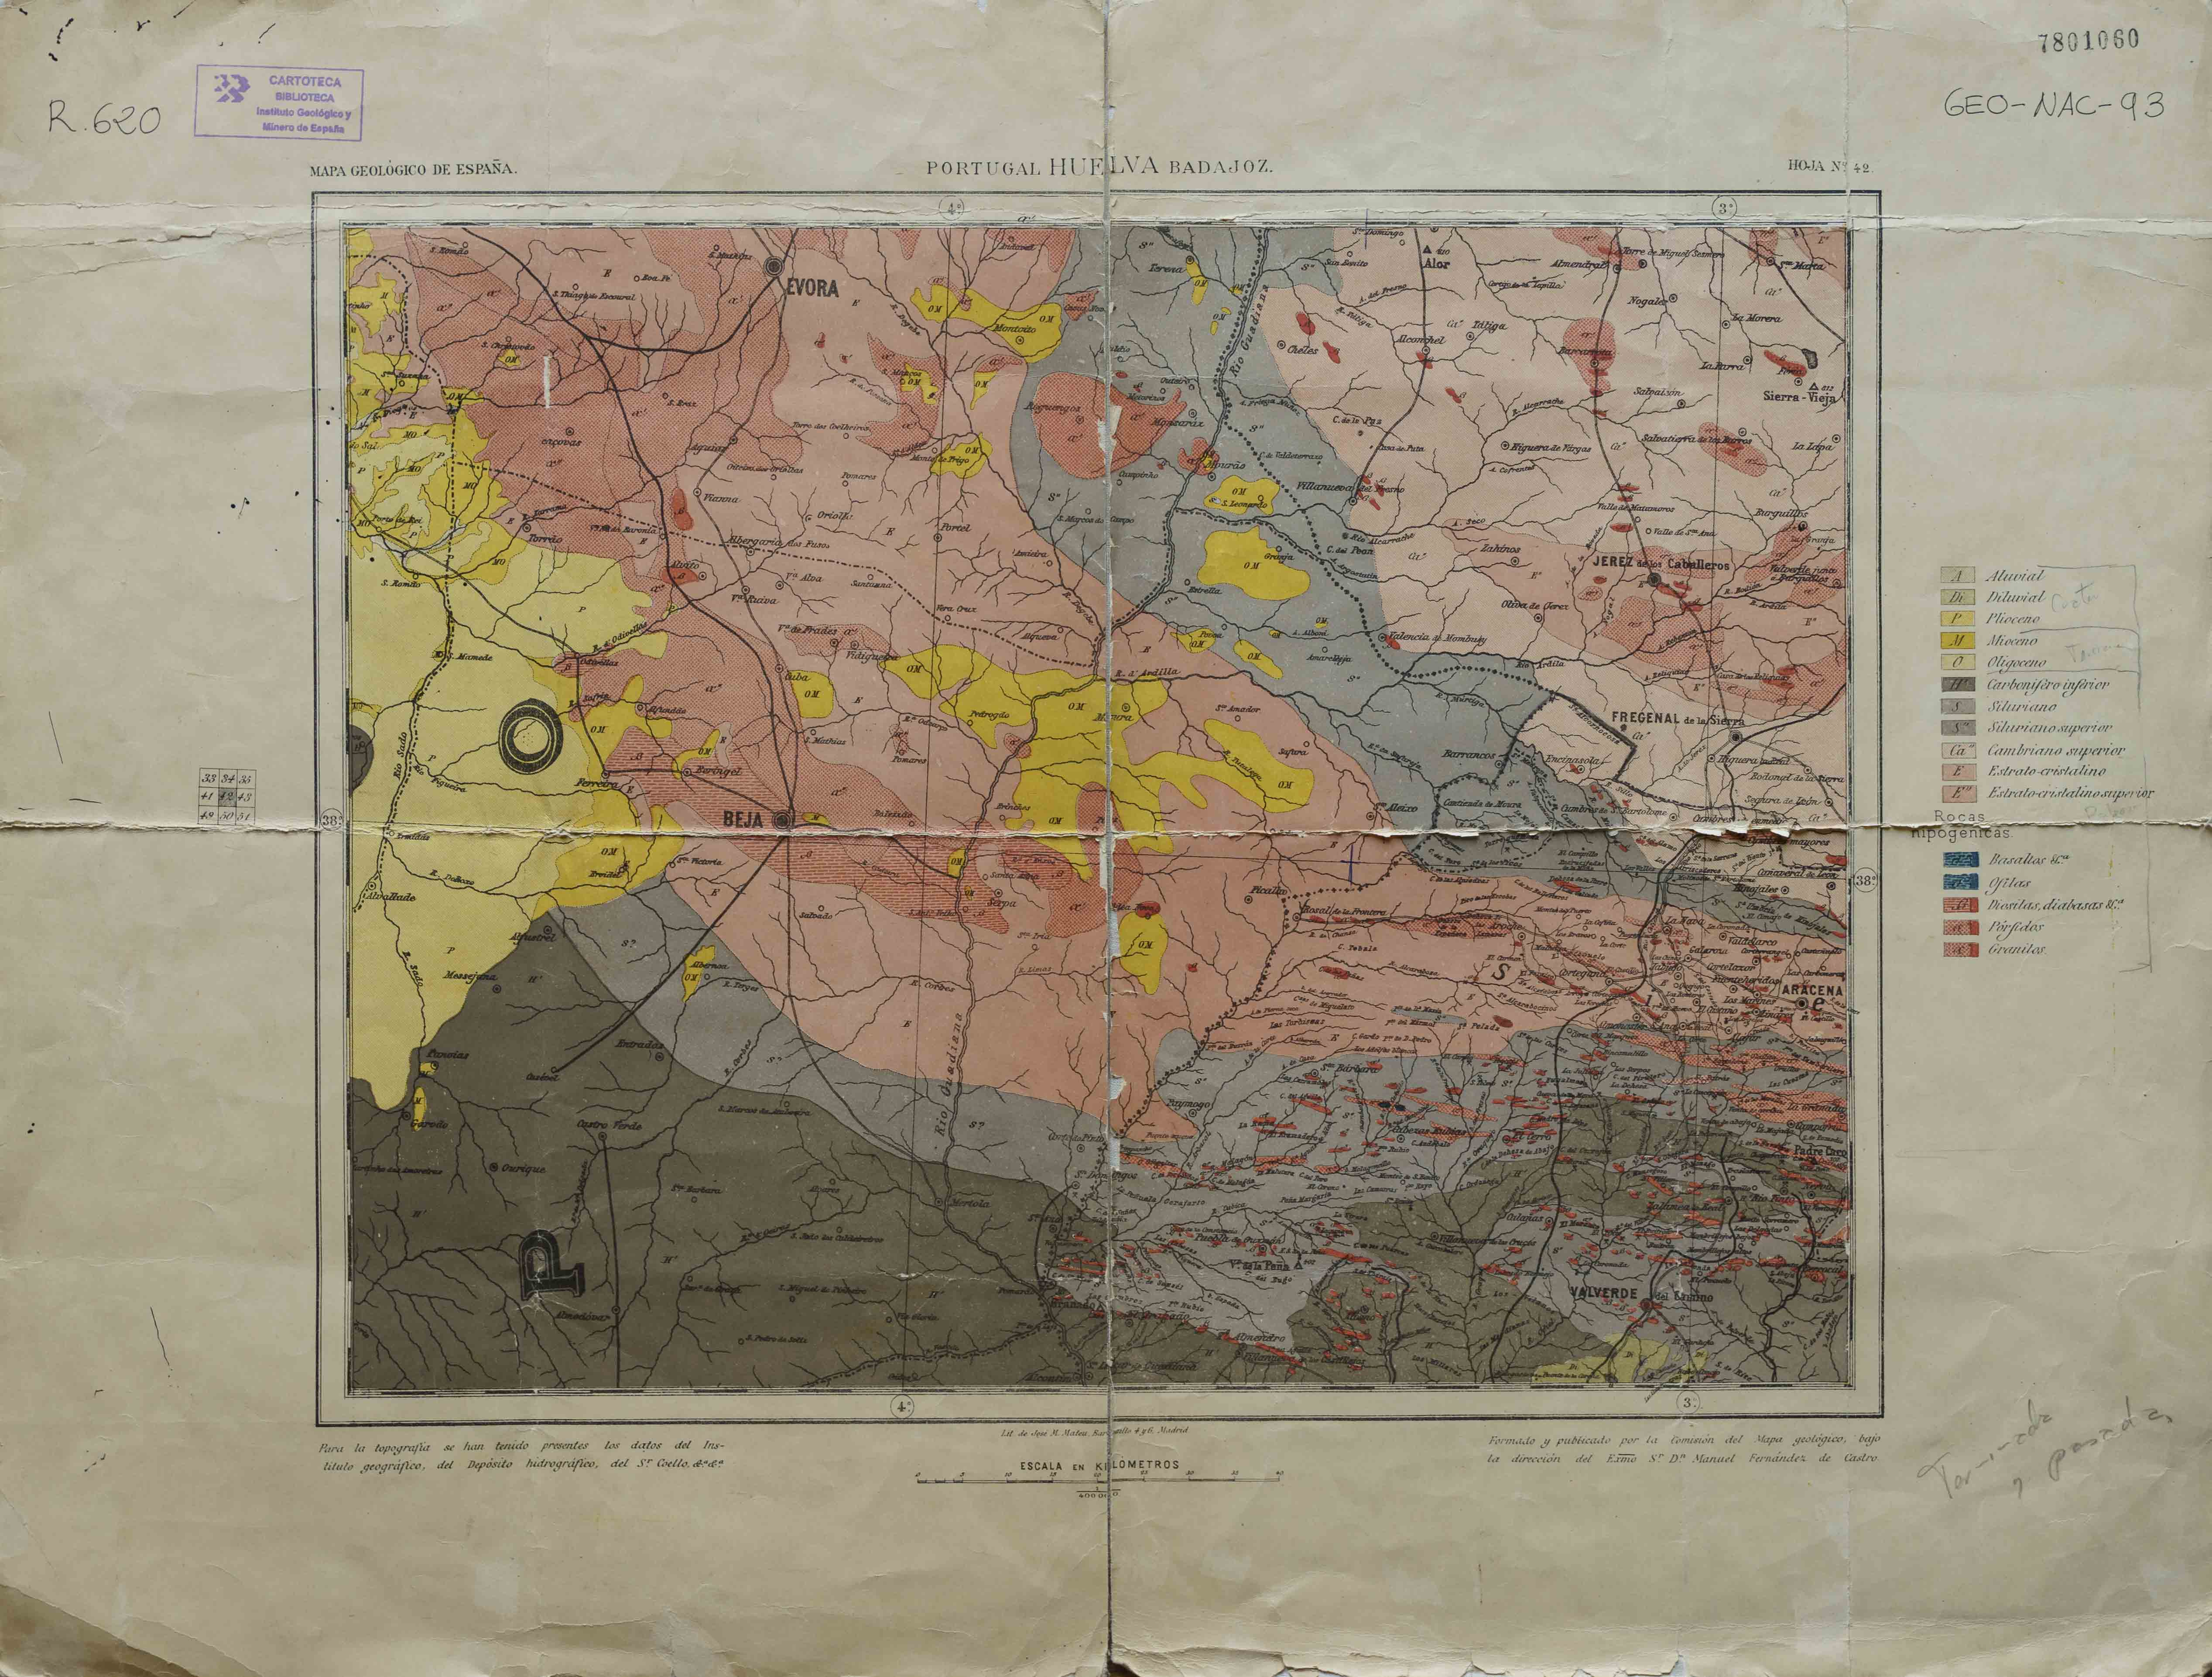 Mapa geológico de España : Portugal, Huelva, Badajoz : hoja nº 42